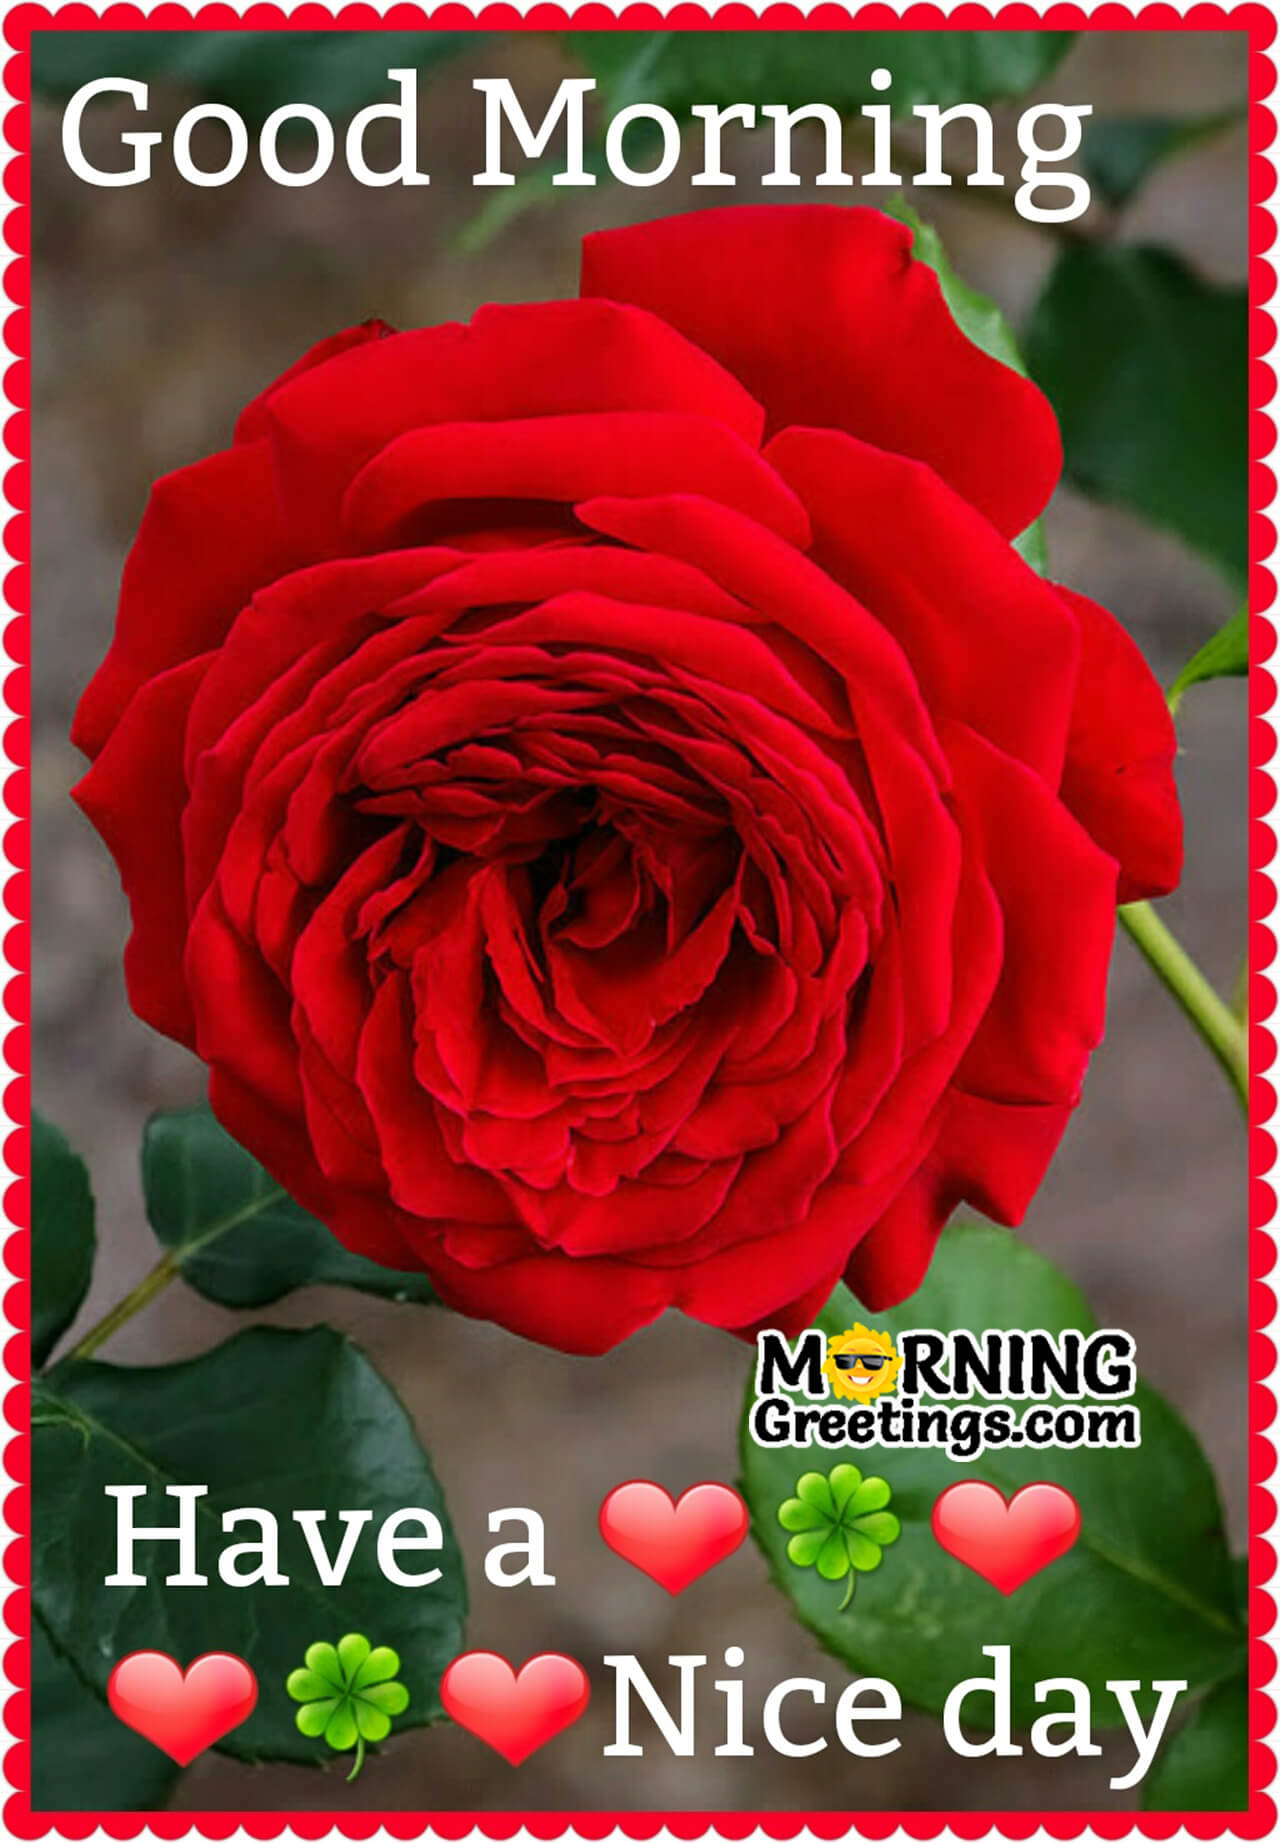 Beautiful Good Morning Rose Images